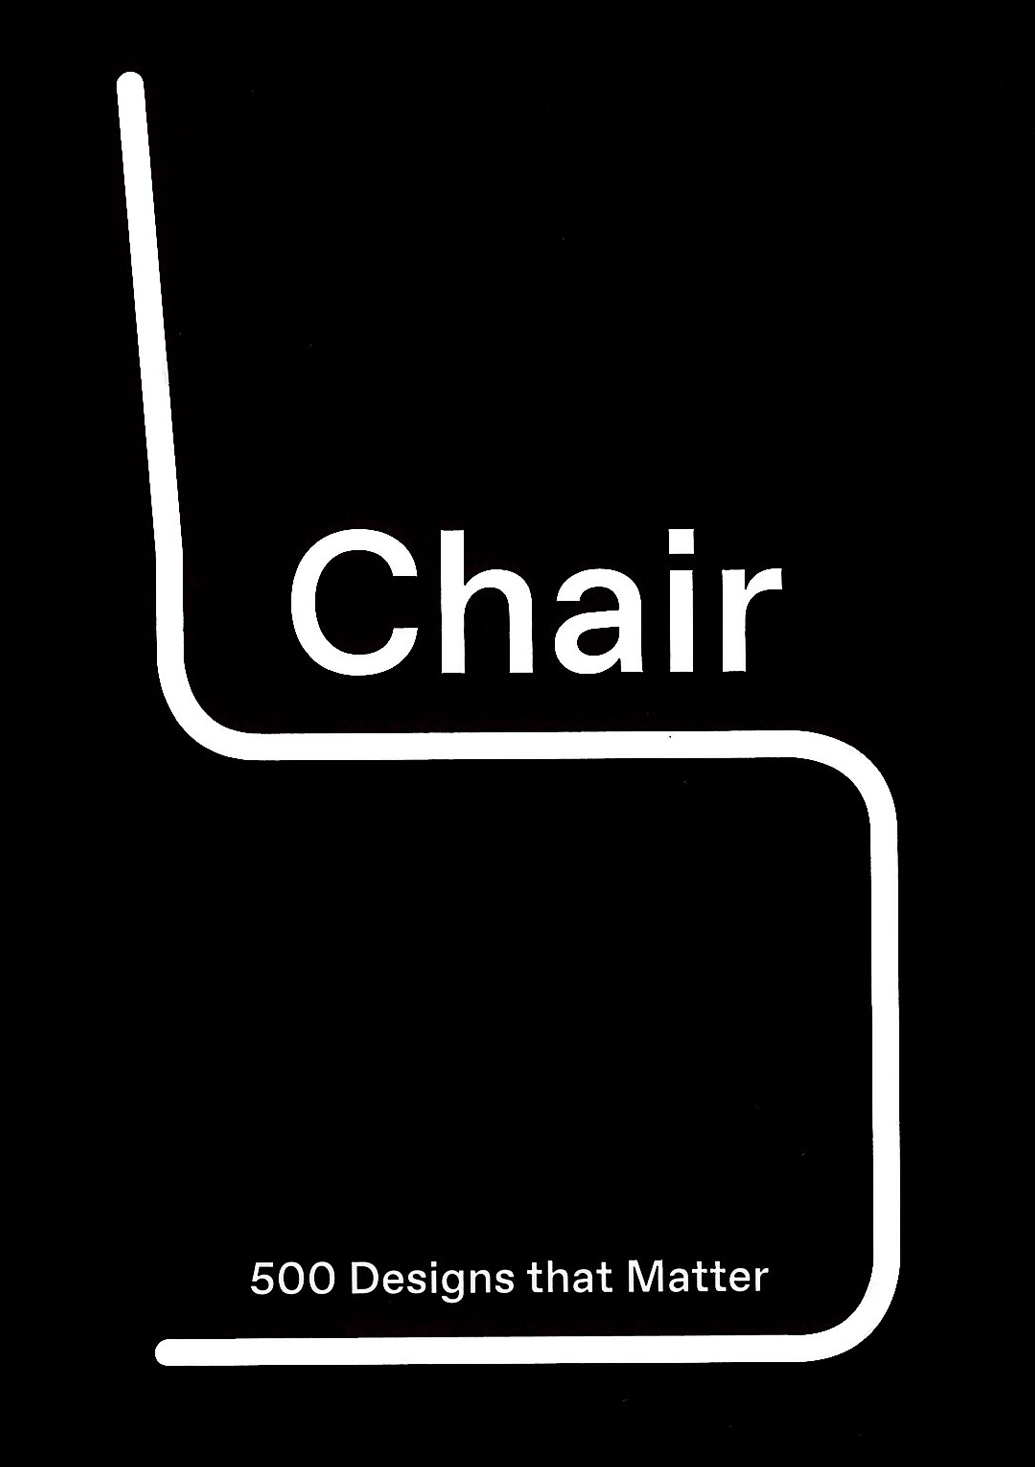 Chair by Phaidon - 500 Designs that Matter